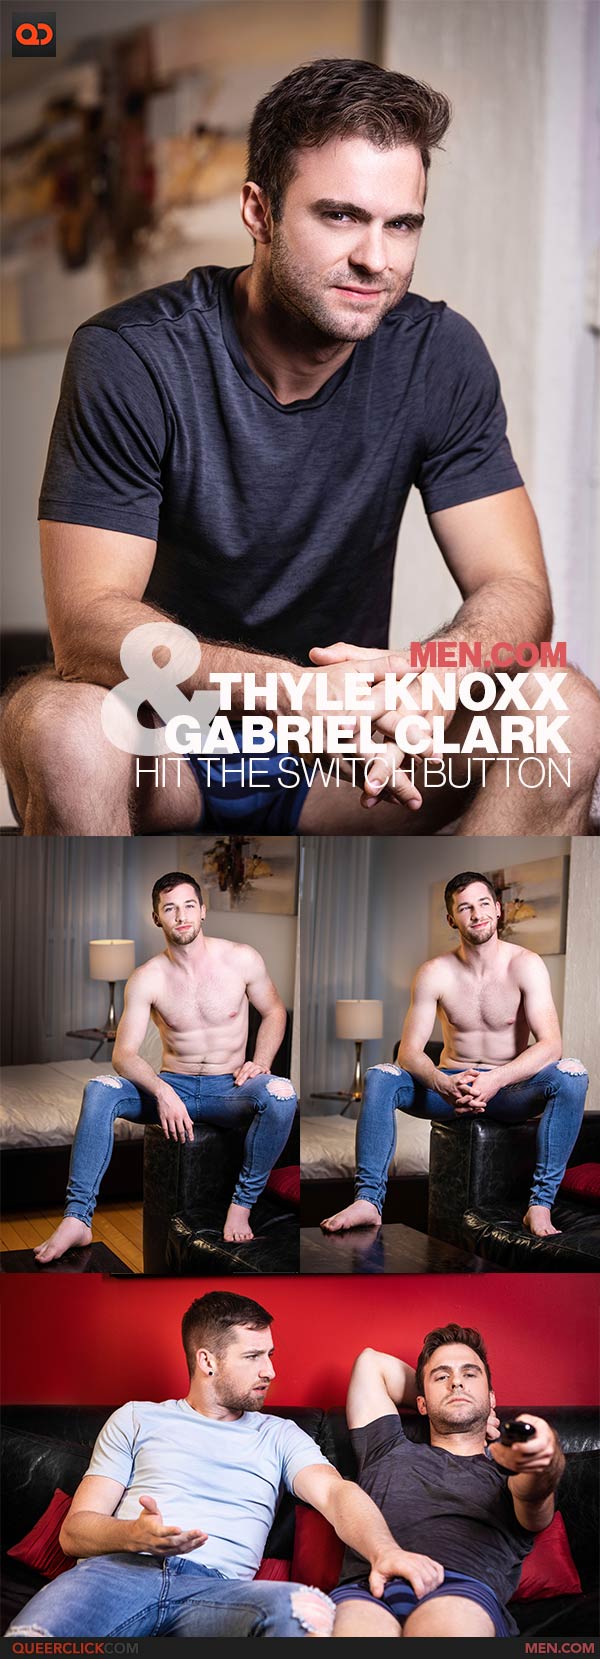 Men.com: Thyle Knoxx and Gabriel Clark